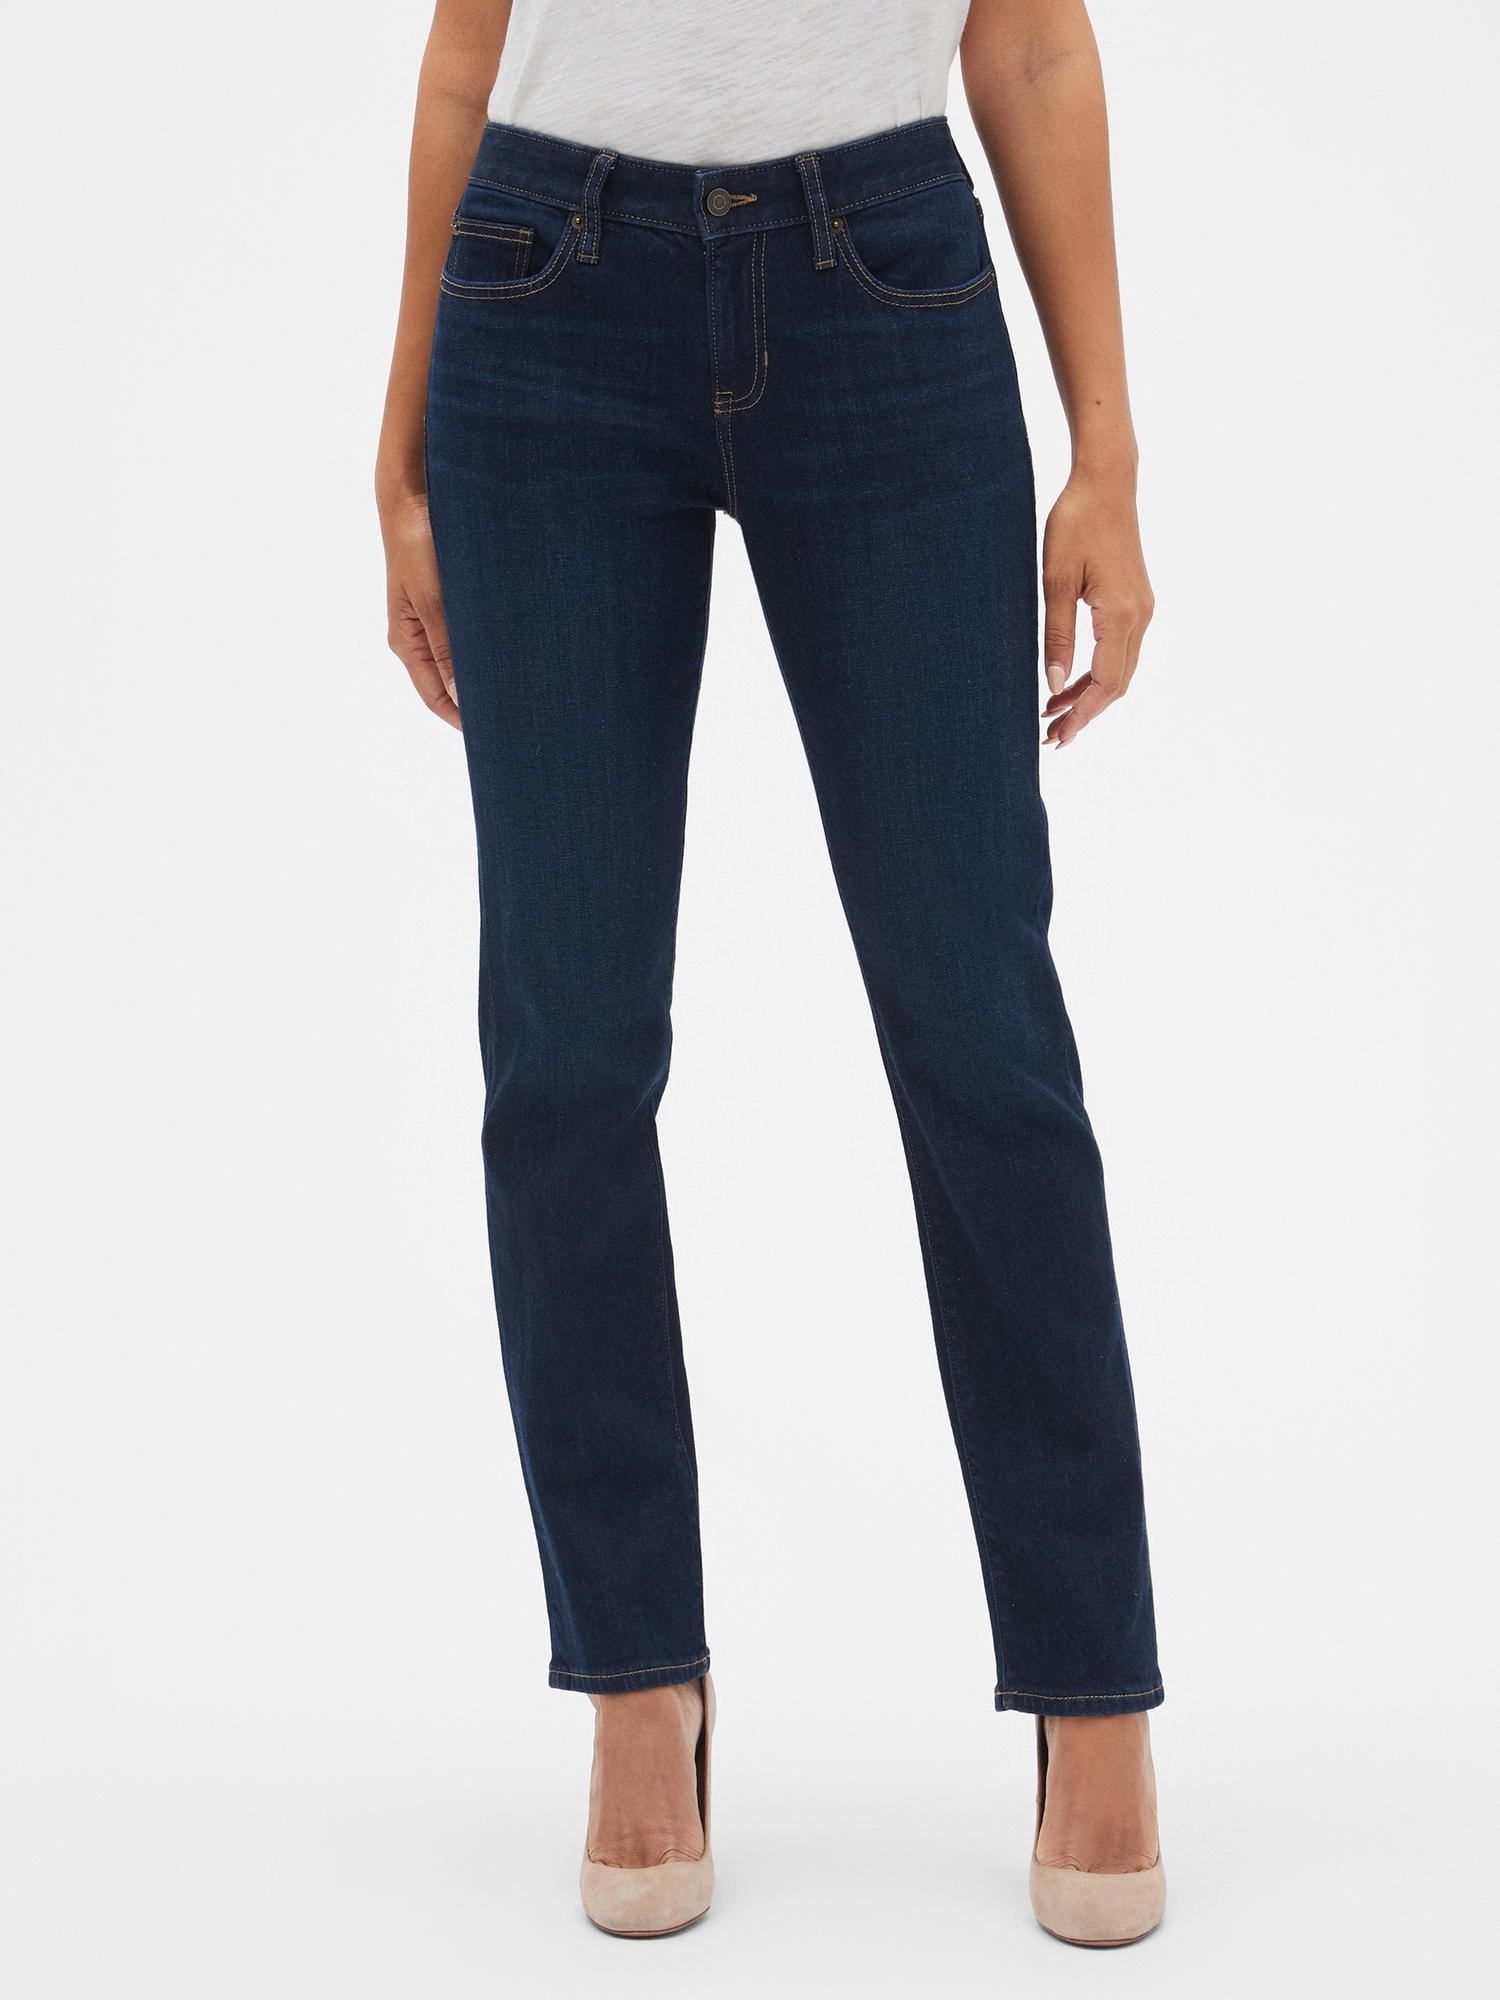 womens gap jeans